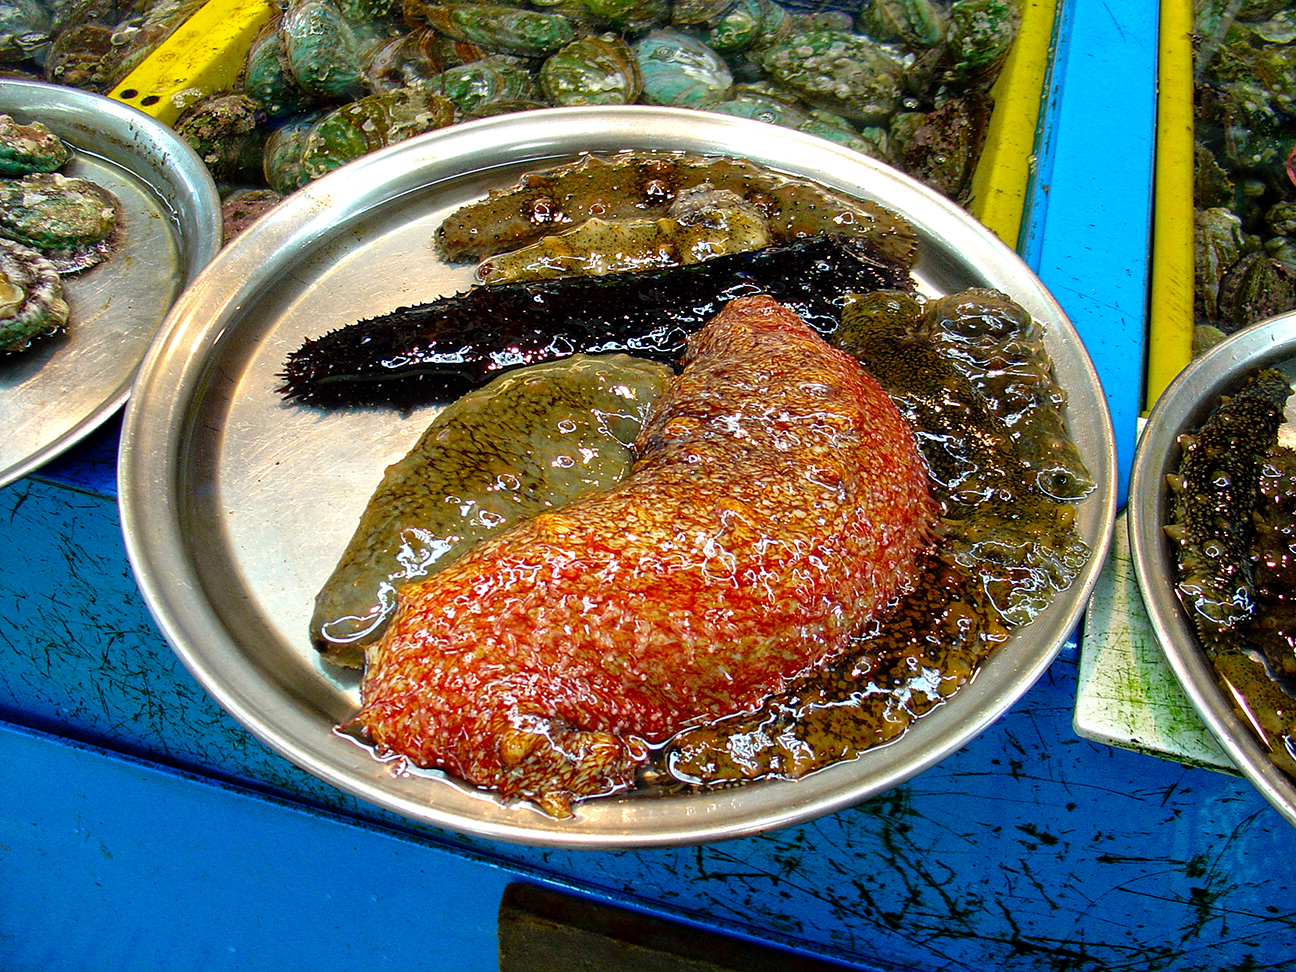 Busan (부산) Fish Market - Sea Cucumber